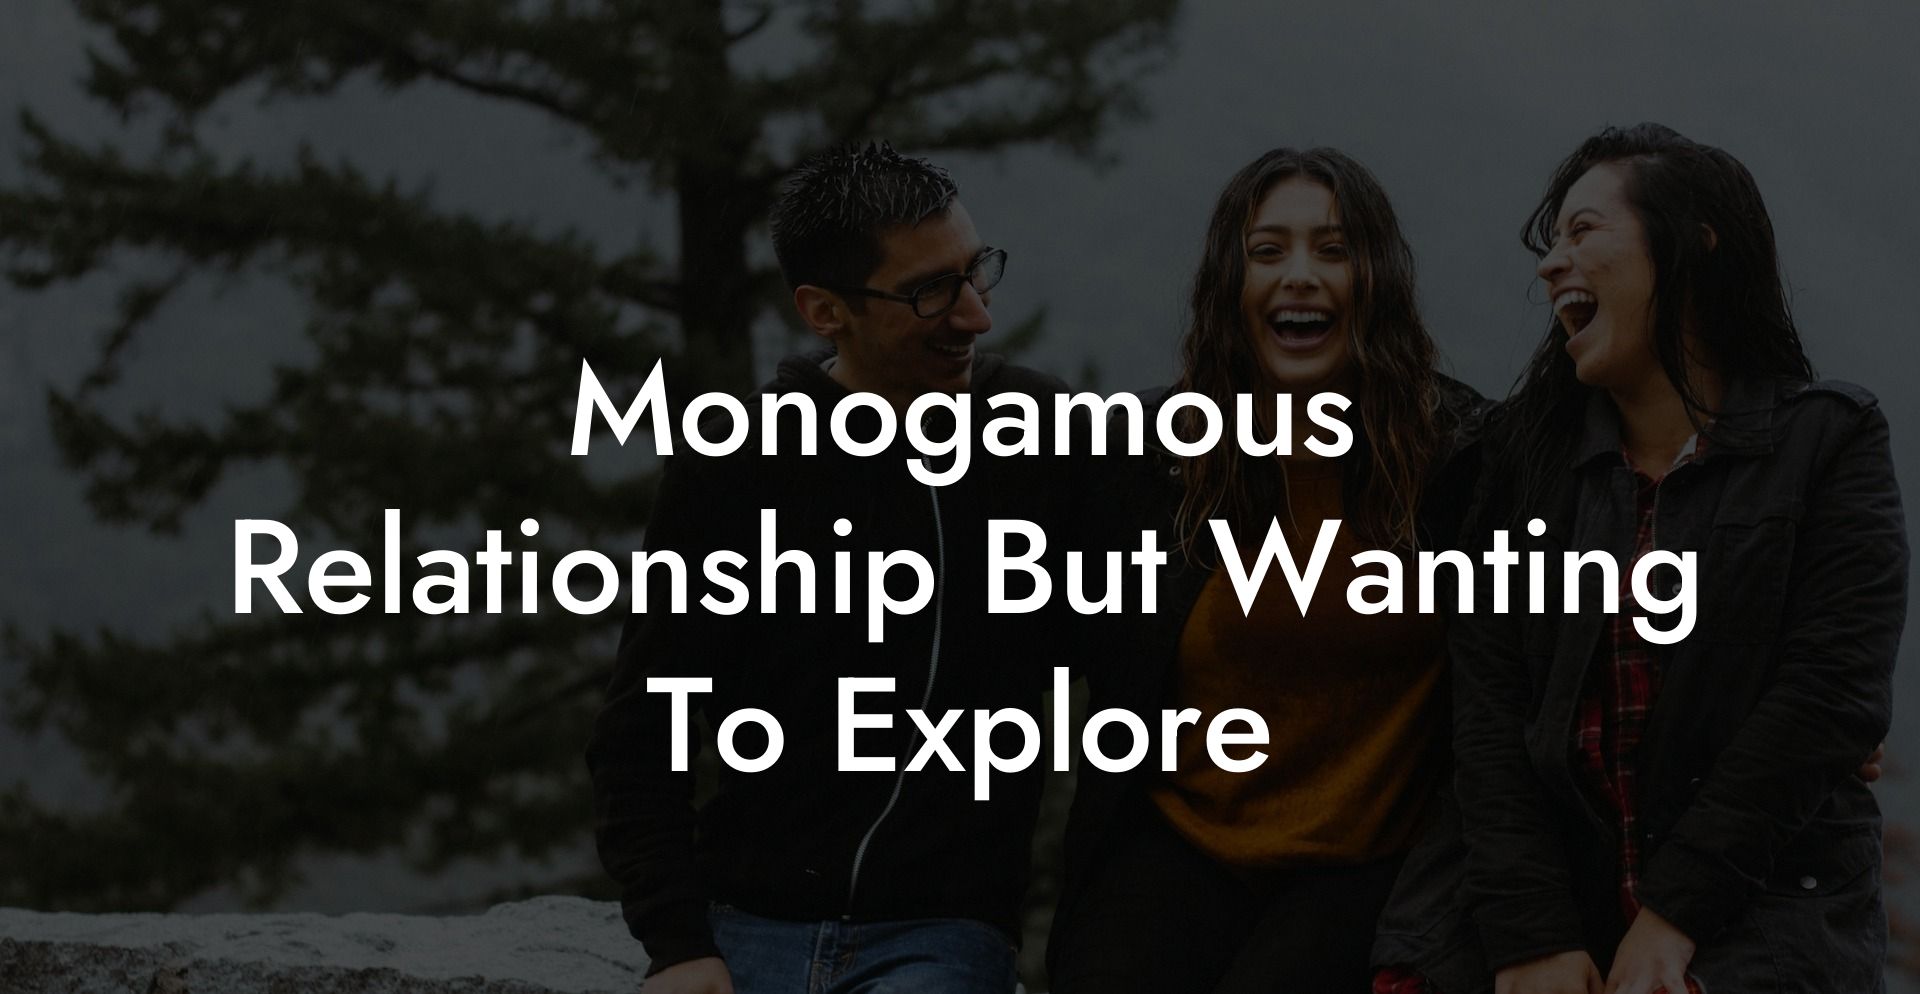 Monogamous Relationship But Wanting To Explore